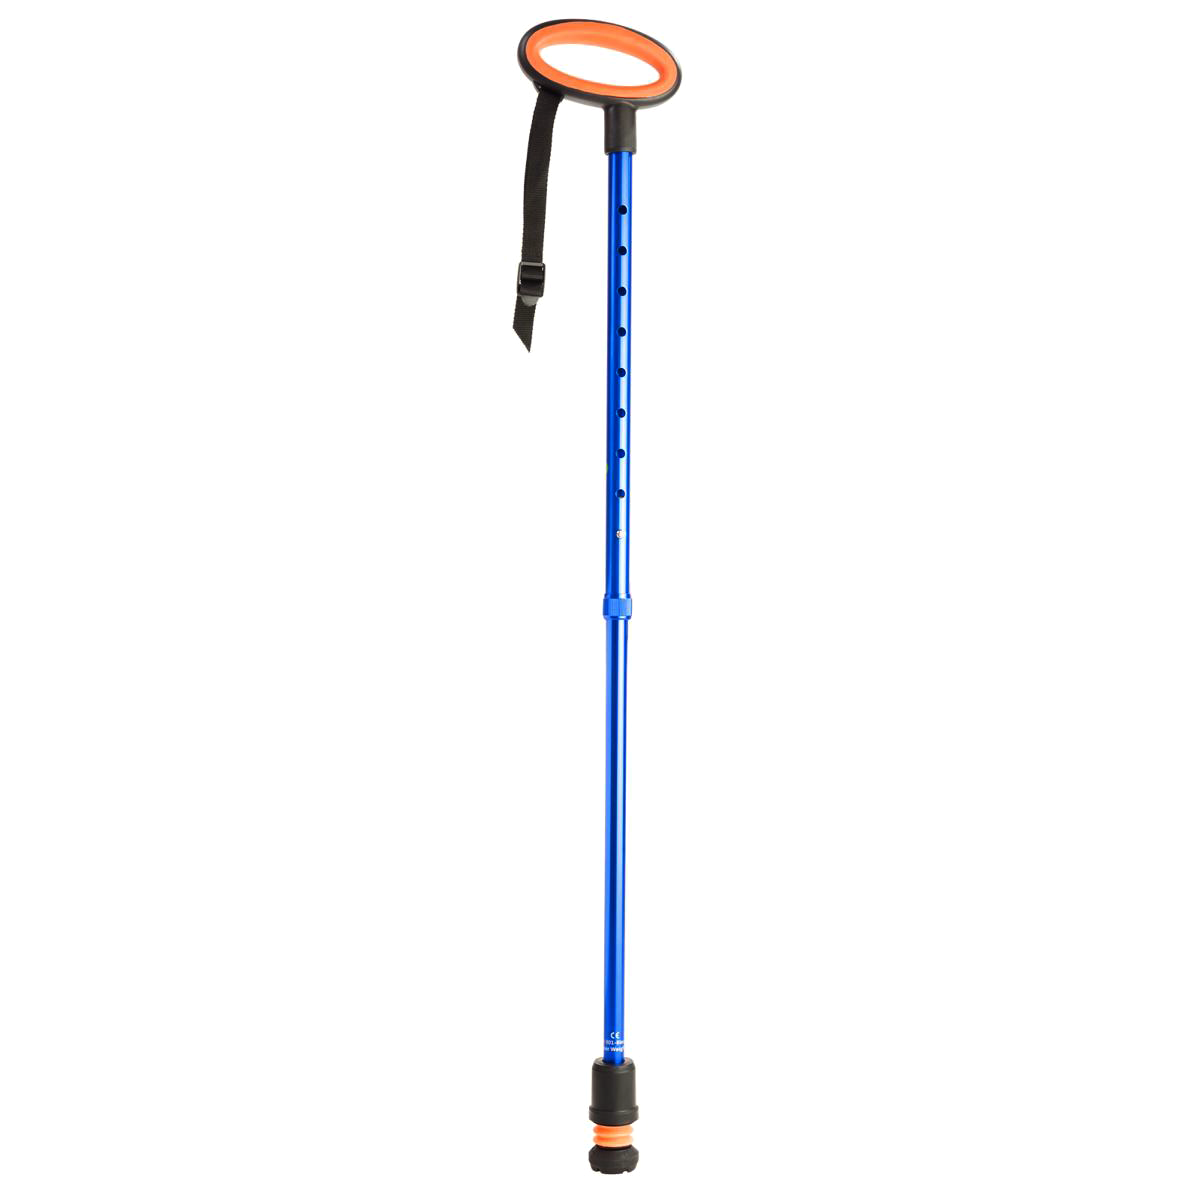 A single blue Flexyfoot Premium Oval Handle Walking Stick